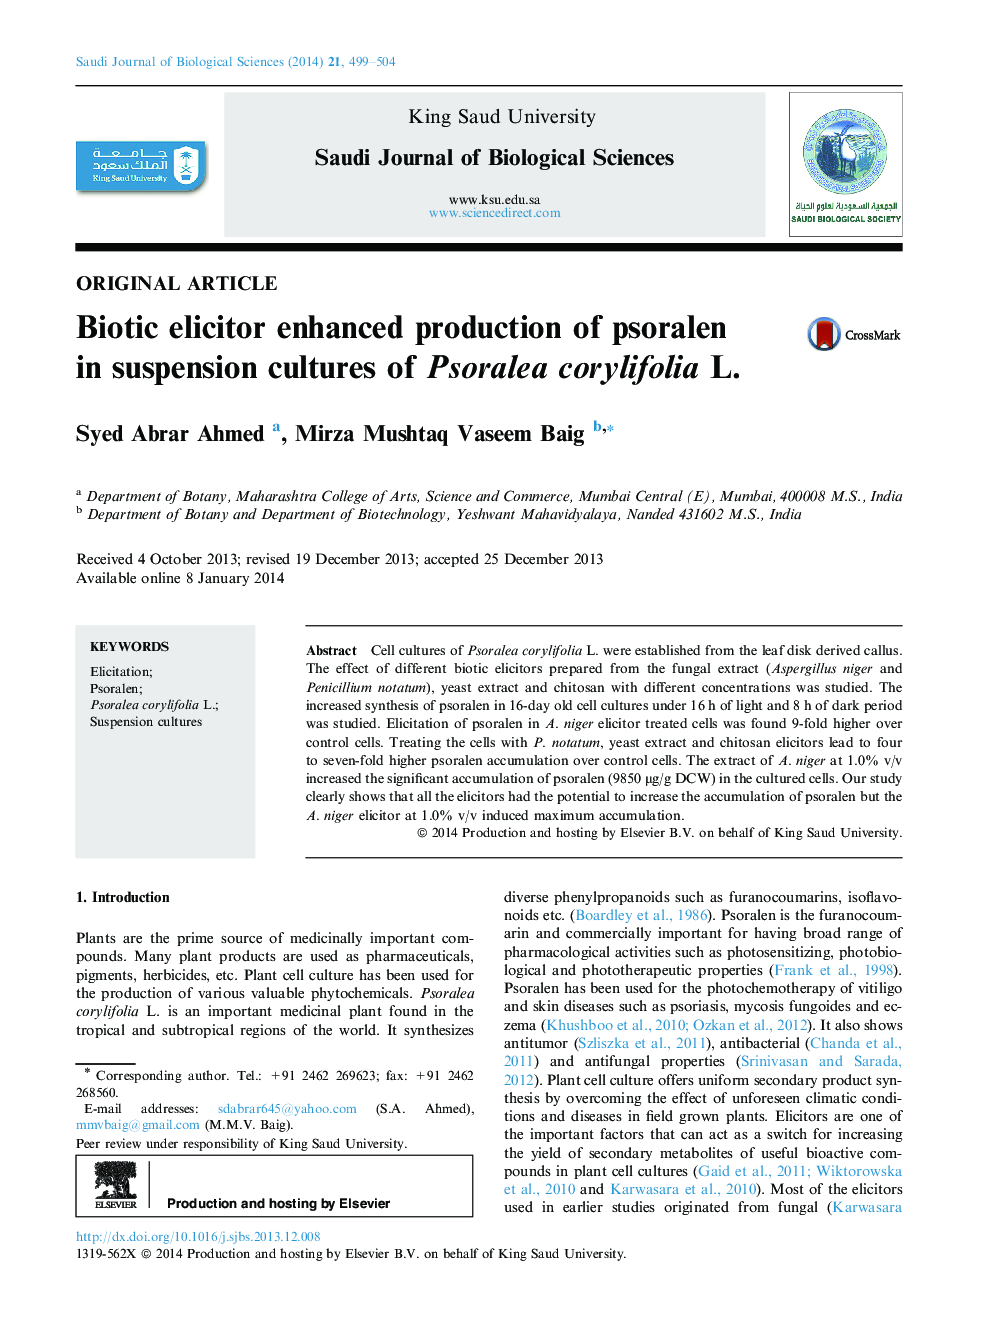 Biotic elicitor enhanced production of psoralen in suspension cultures of Psoralea corylifolia L. 